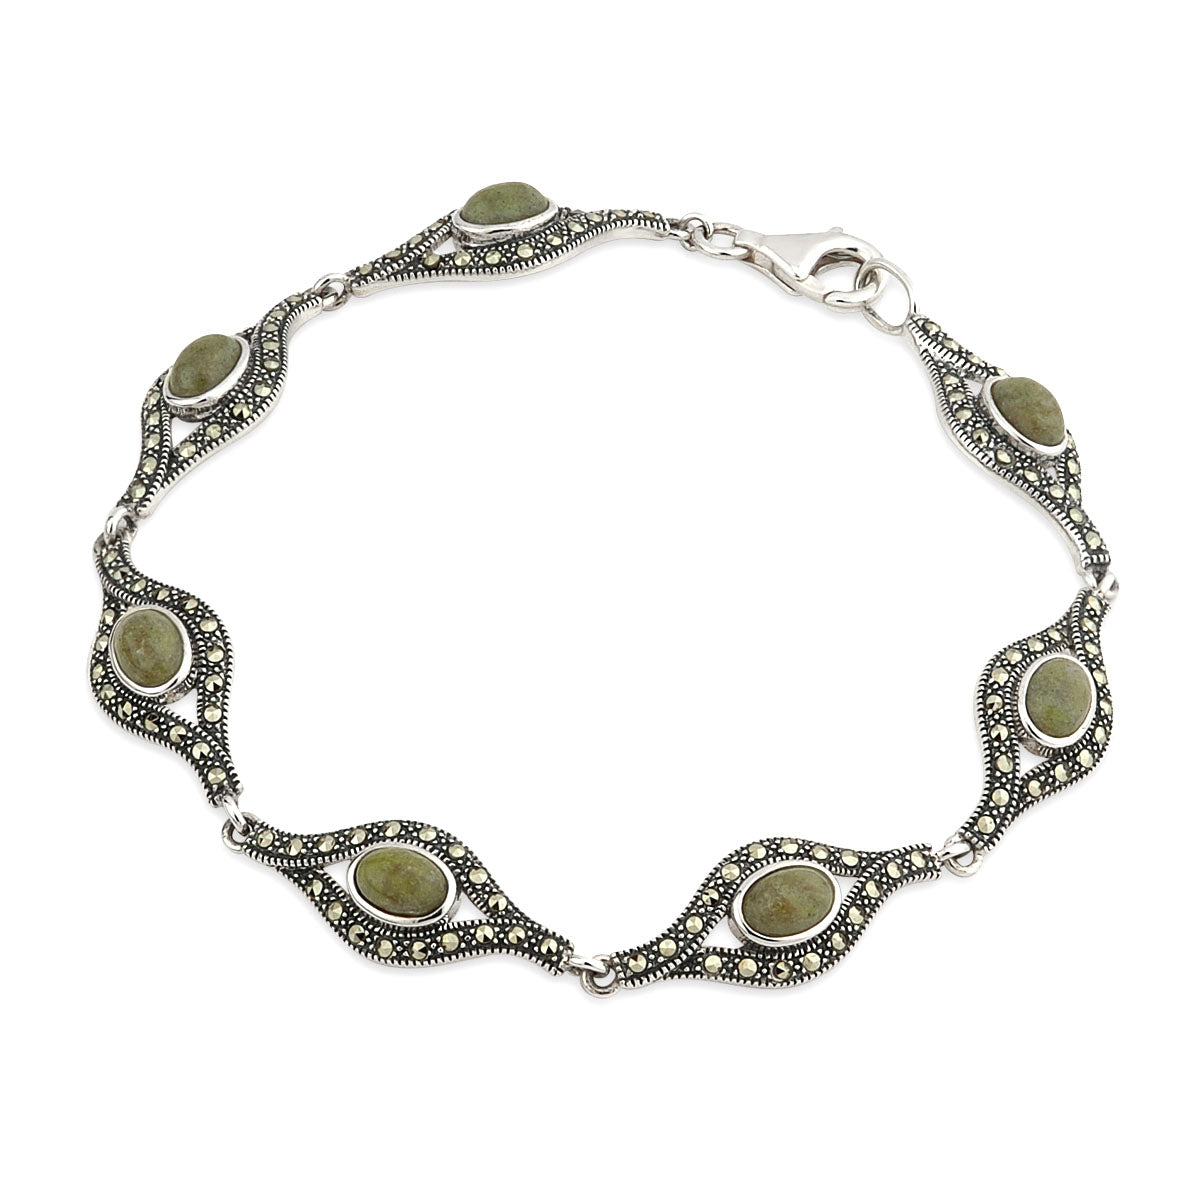 sterling silver connemara marble and marcasite celtic bracelet s5726 from Solvar